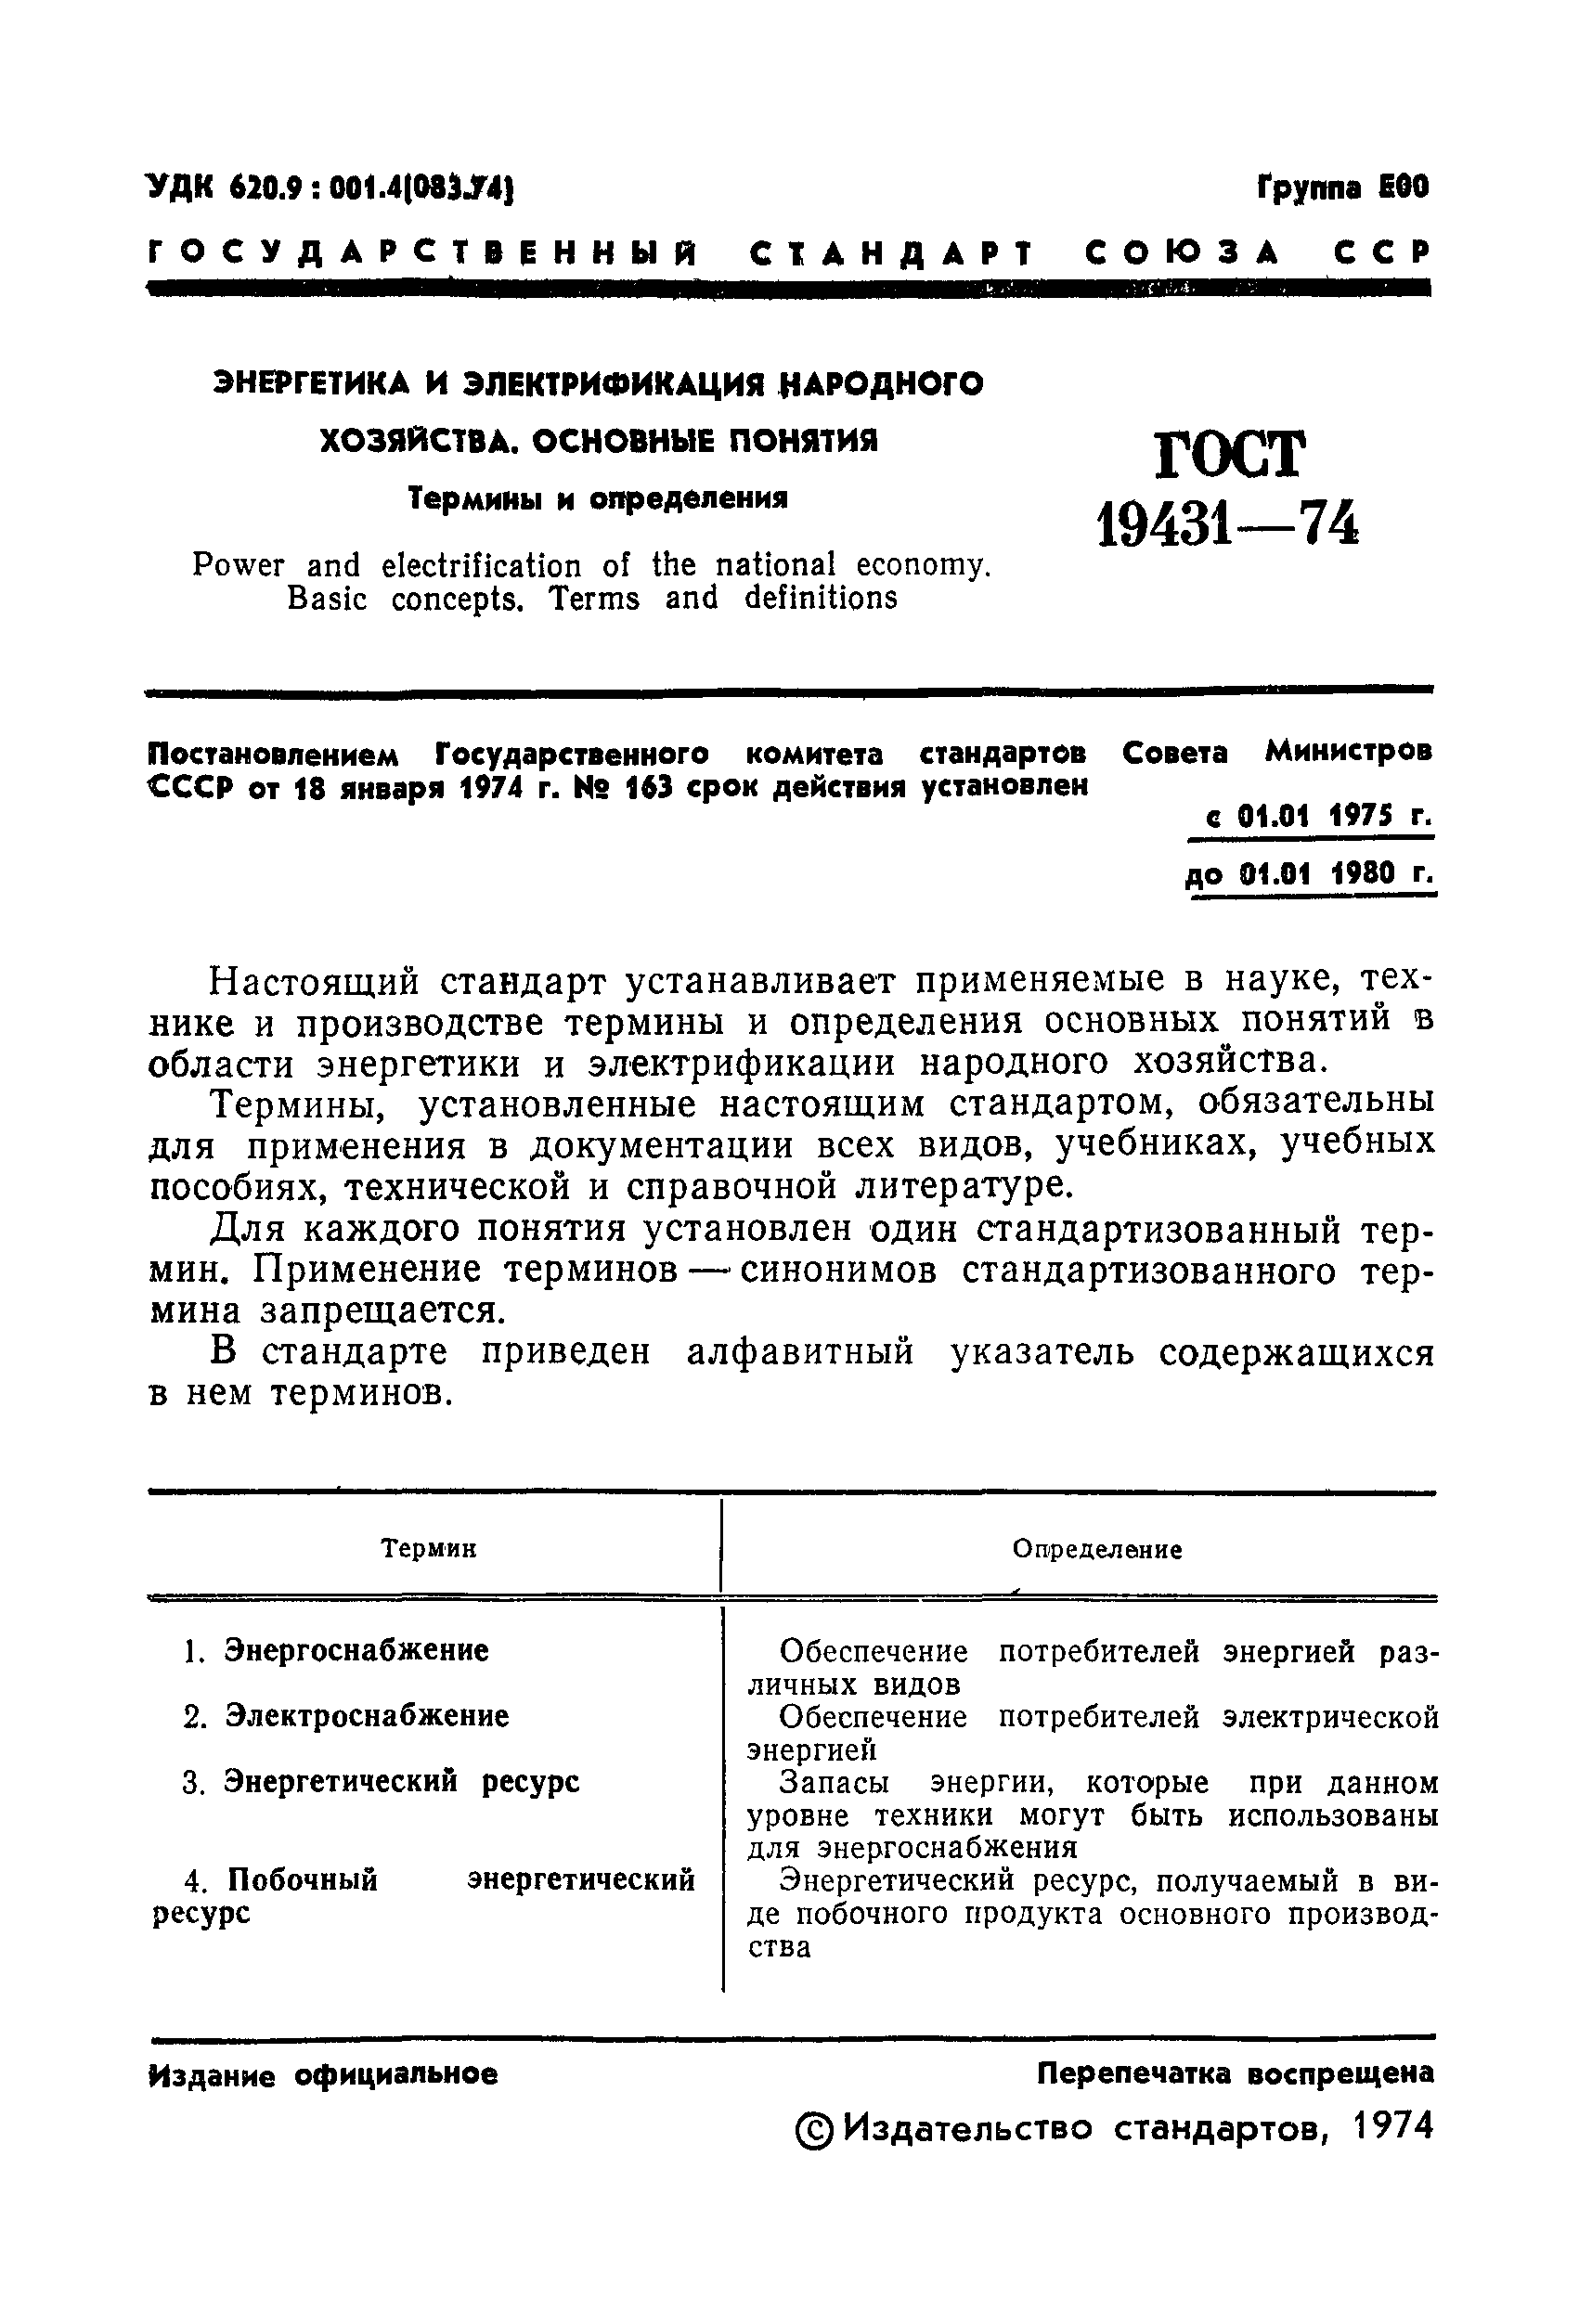 ГОСТ 19431-74